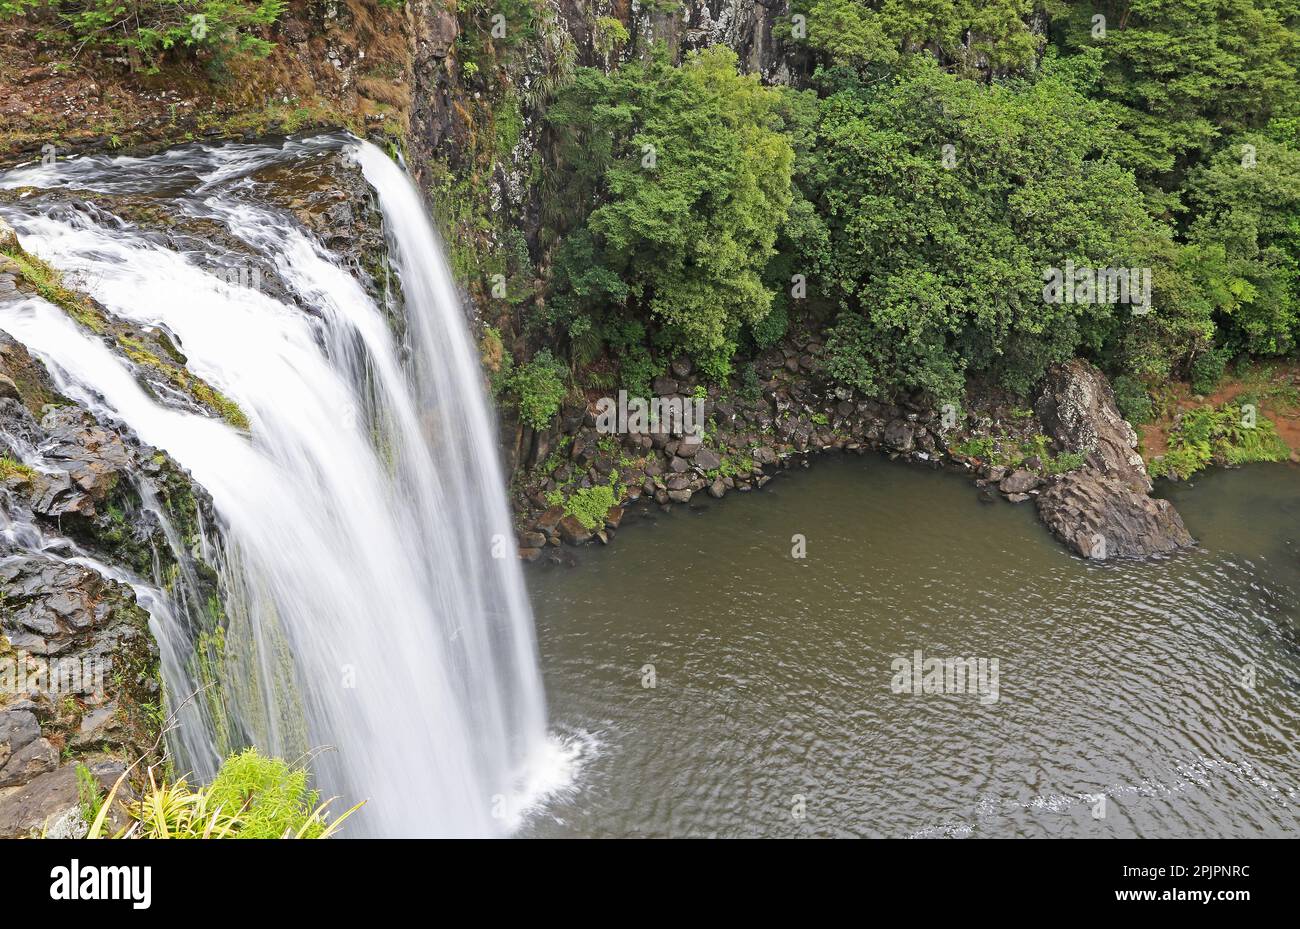 Hatea River and Whangarei Falls - New Zealand Stock Photo